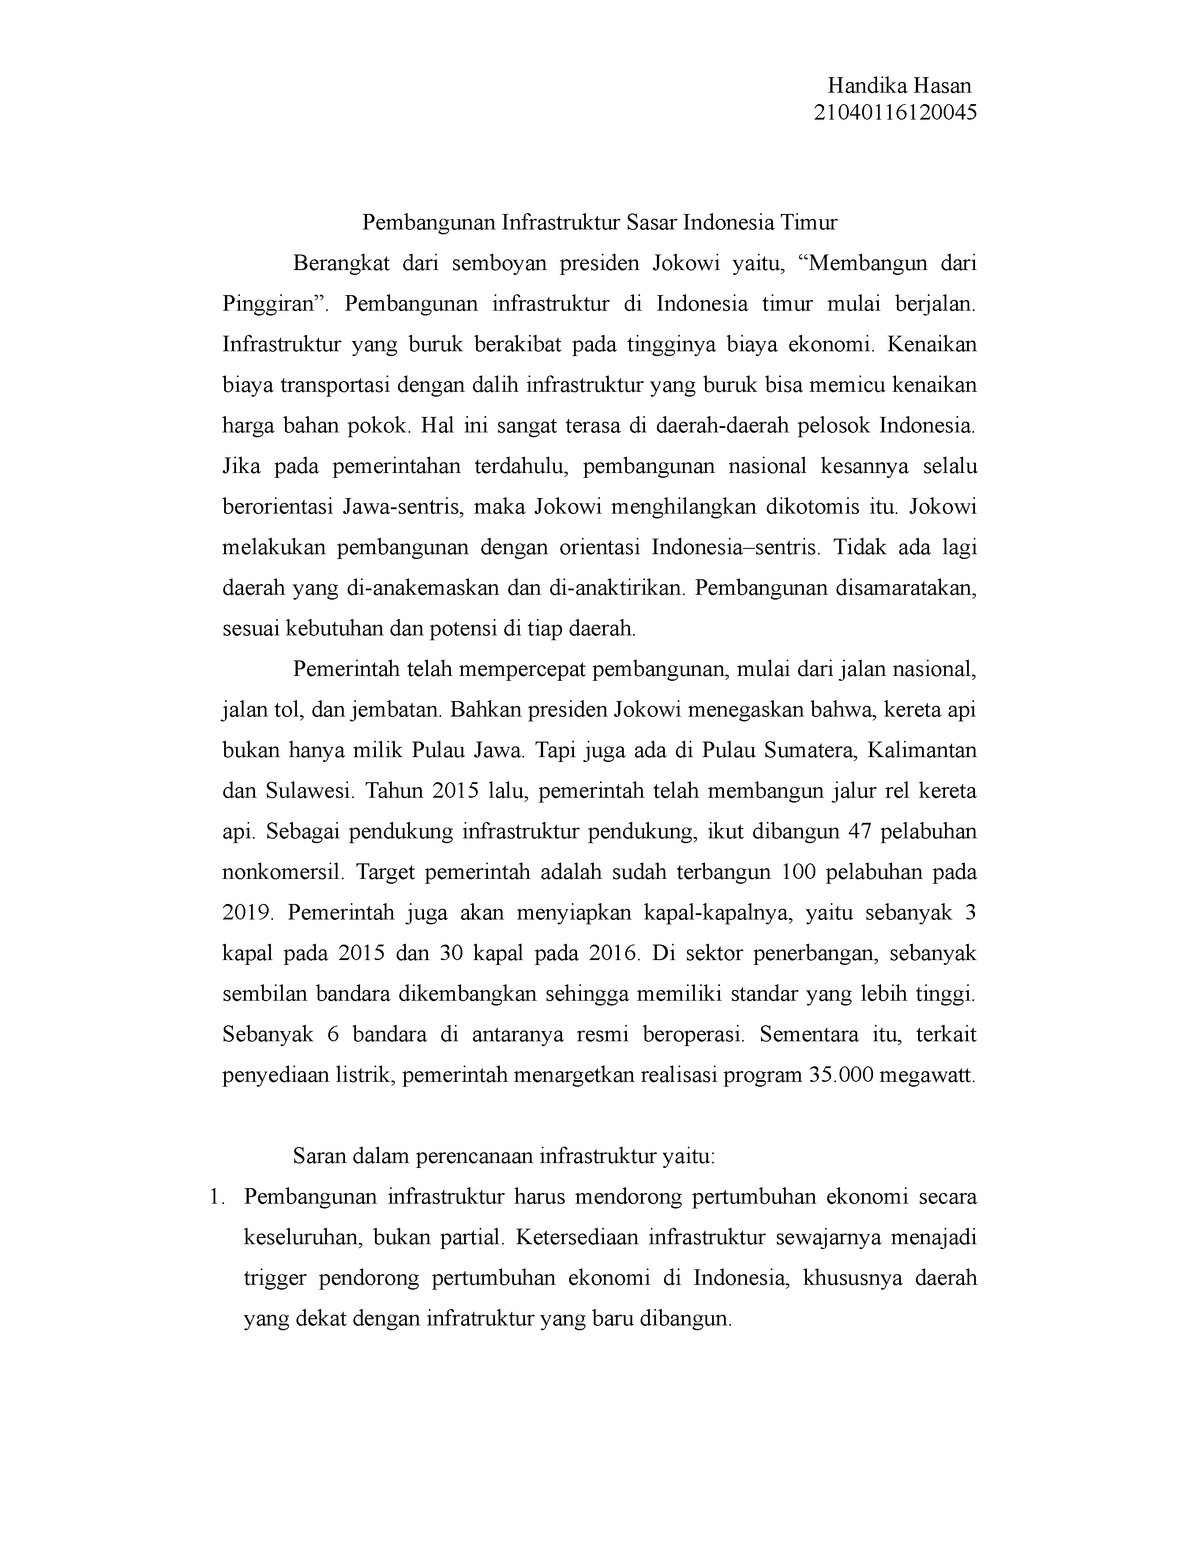 contoh introduction essay bahasa indonesia